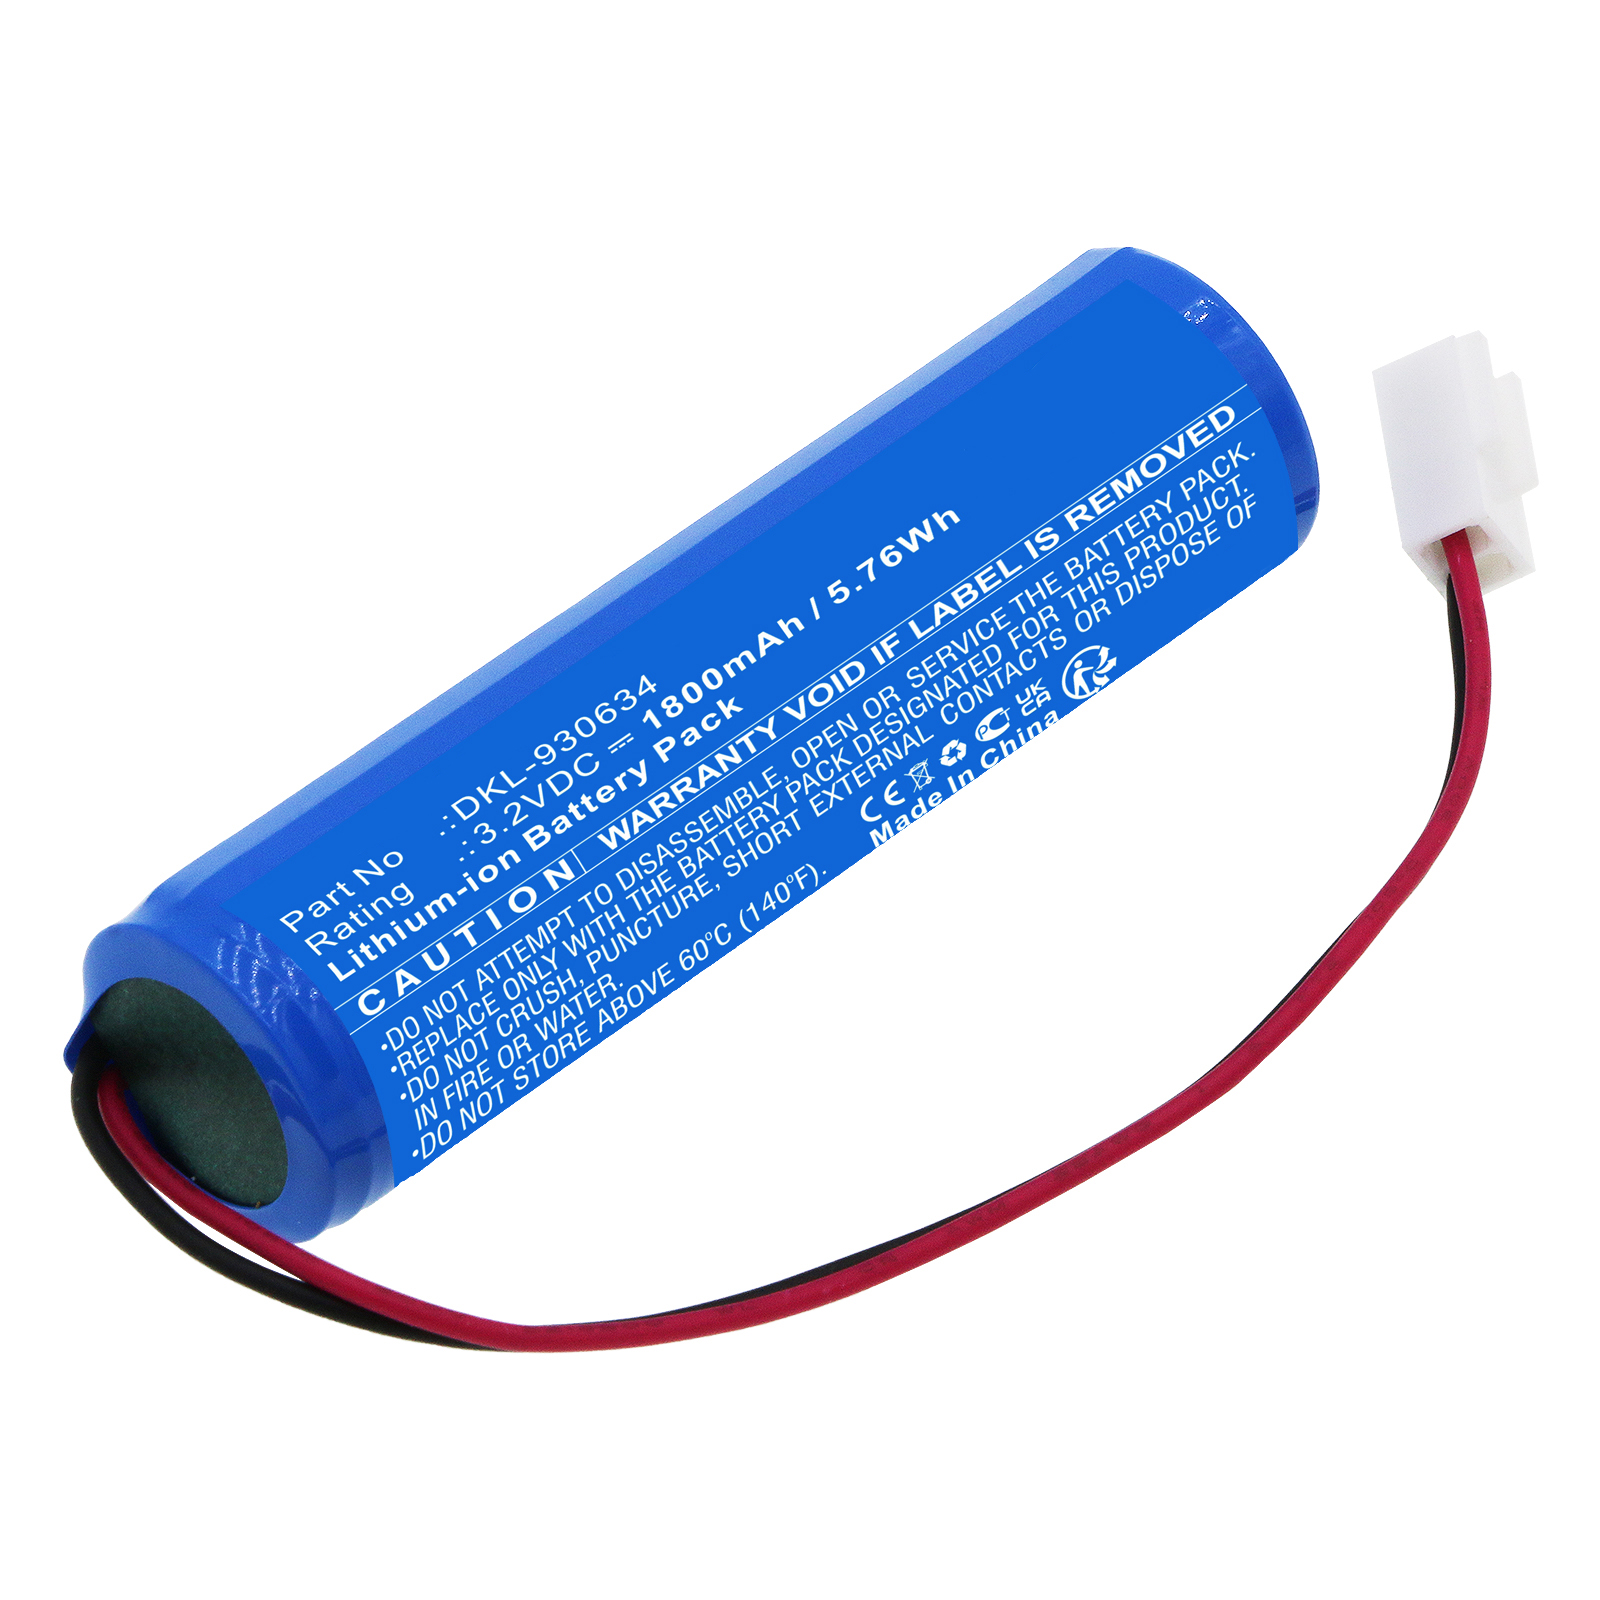 Synergy Digital Emergency Lighting Battery, Compatible with Deko DKL-930634 Emergency Lighting Battery (Li-ion, 3.2V, 1800mAh)